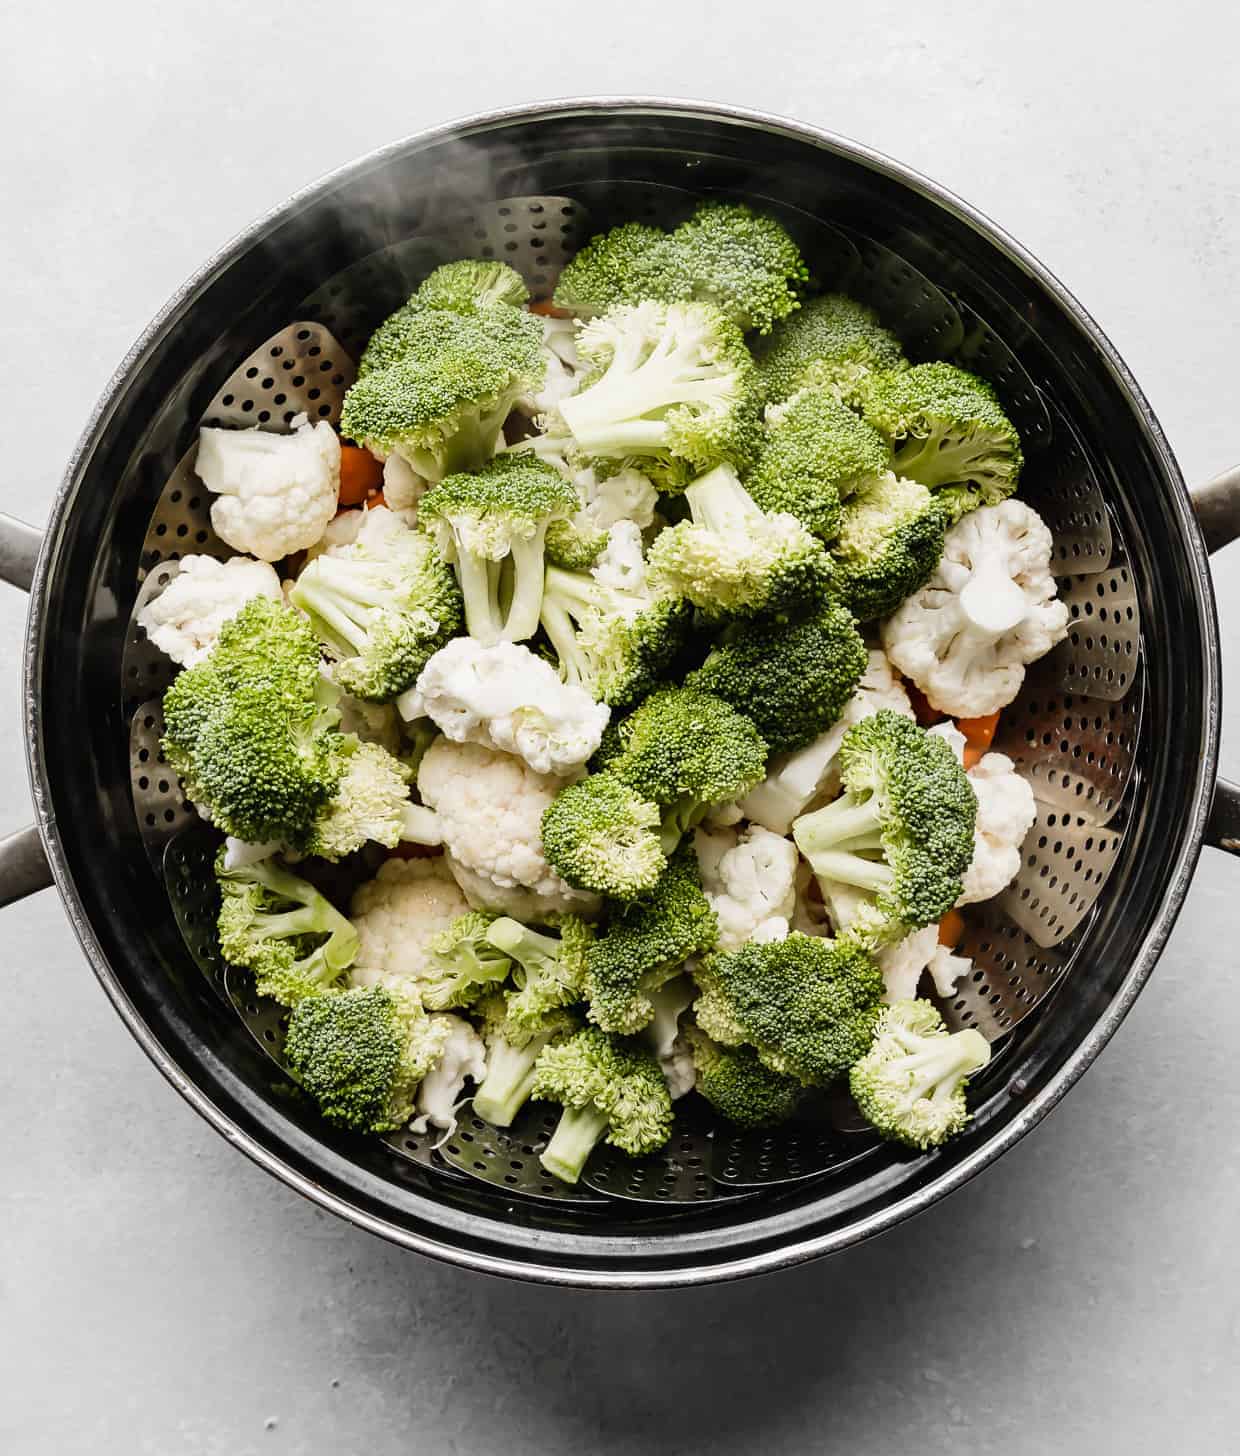 A large pot full of cut broccoli, cauliflower, and carrots.